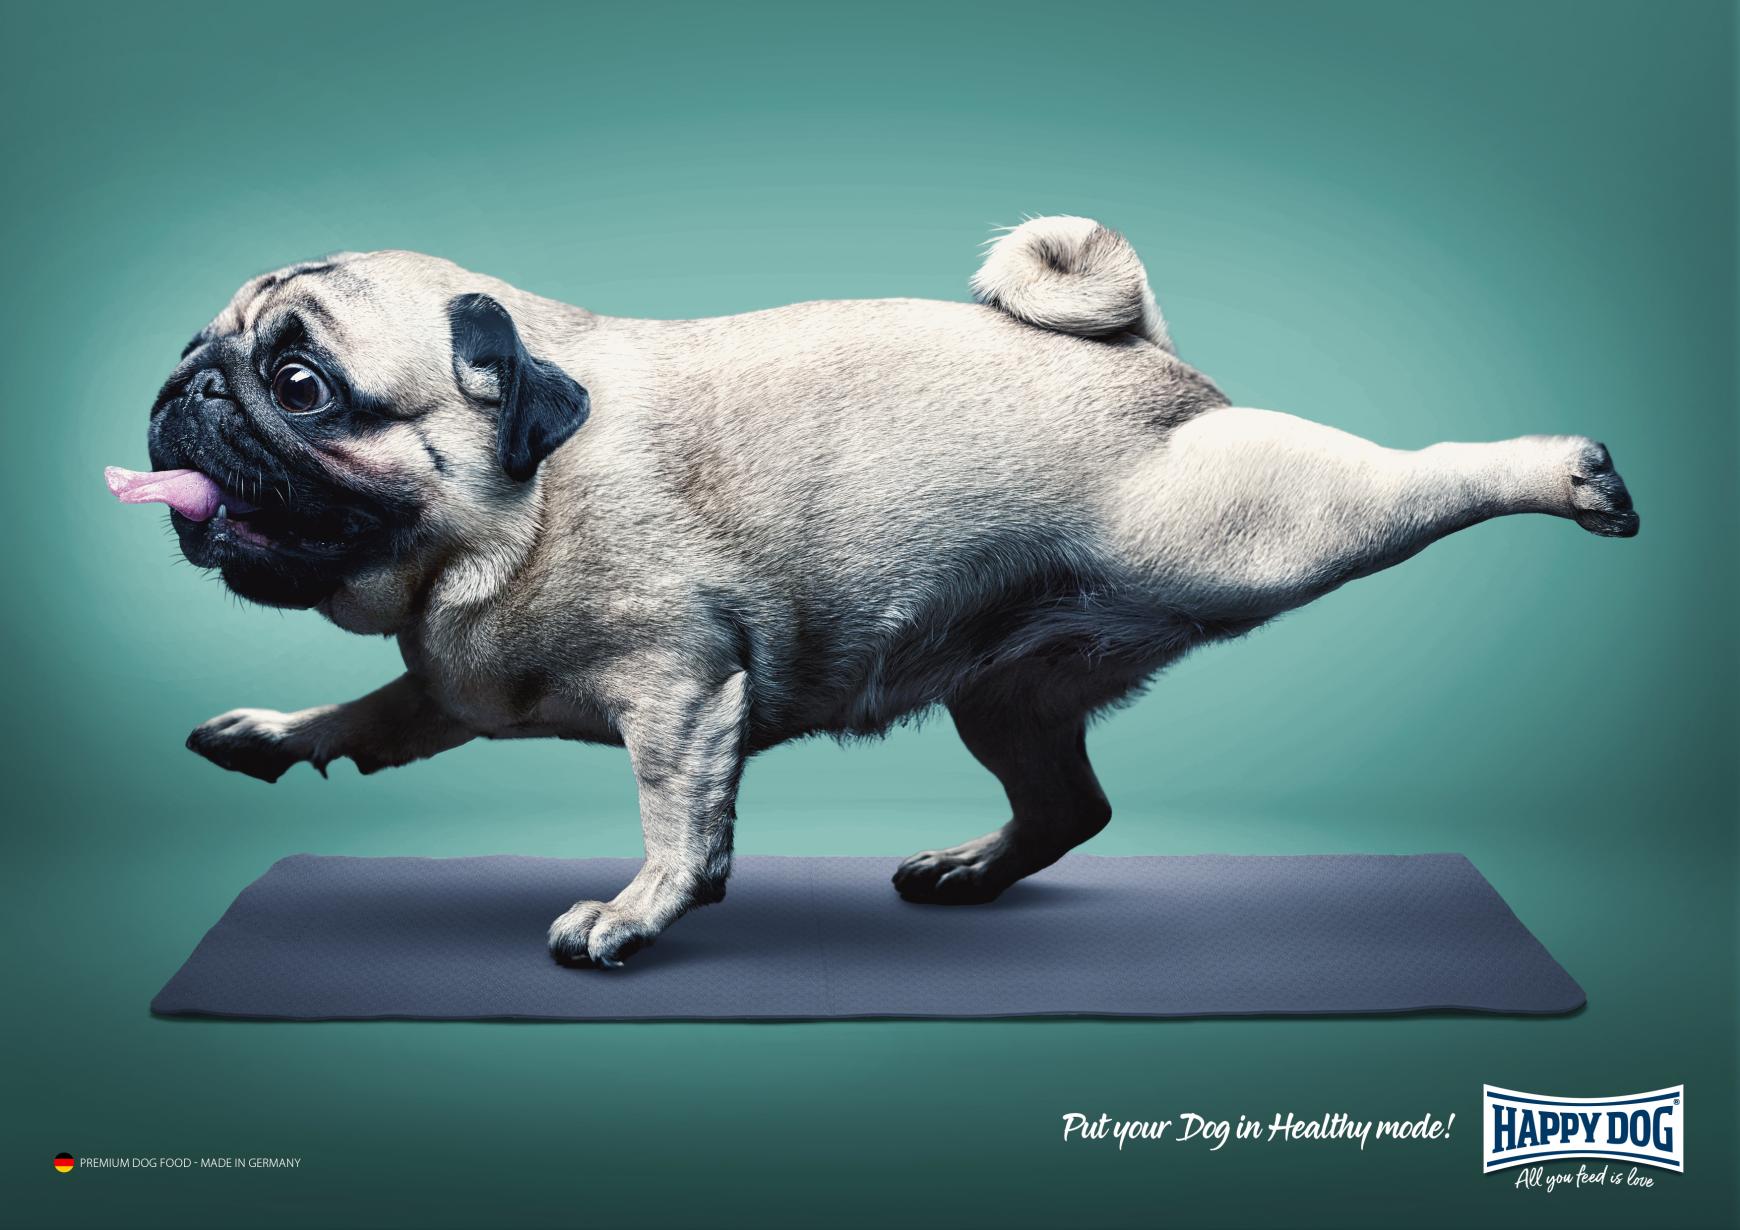 Happy Dog Print Ad - Healthy Mode